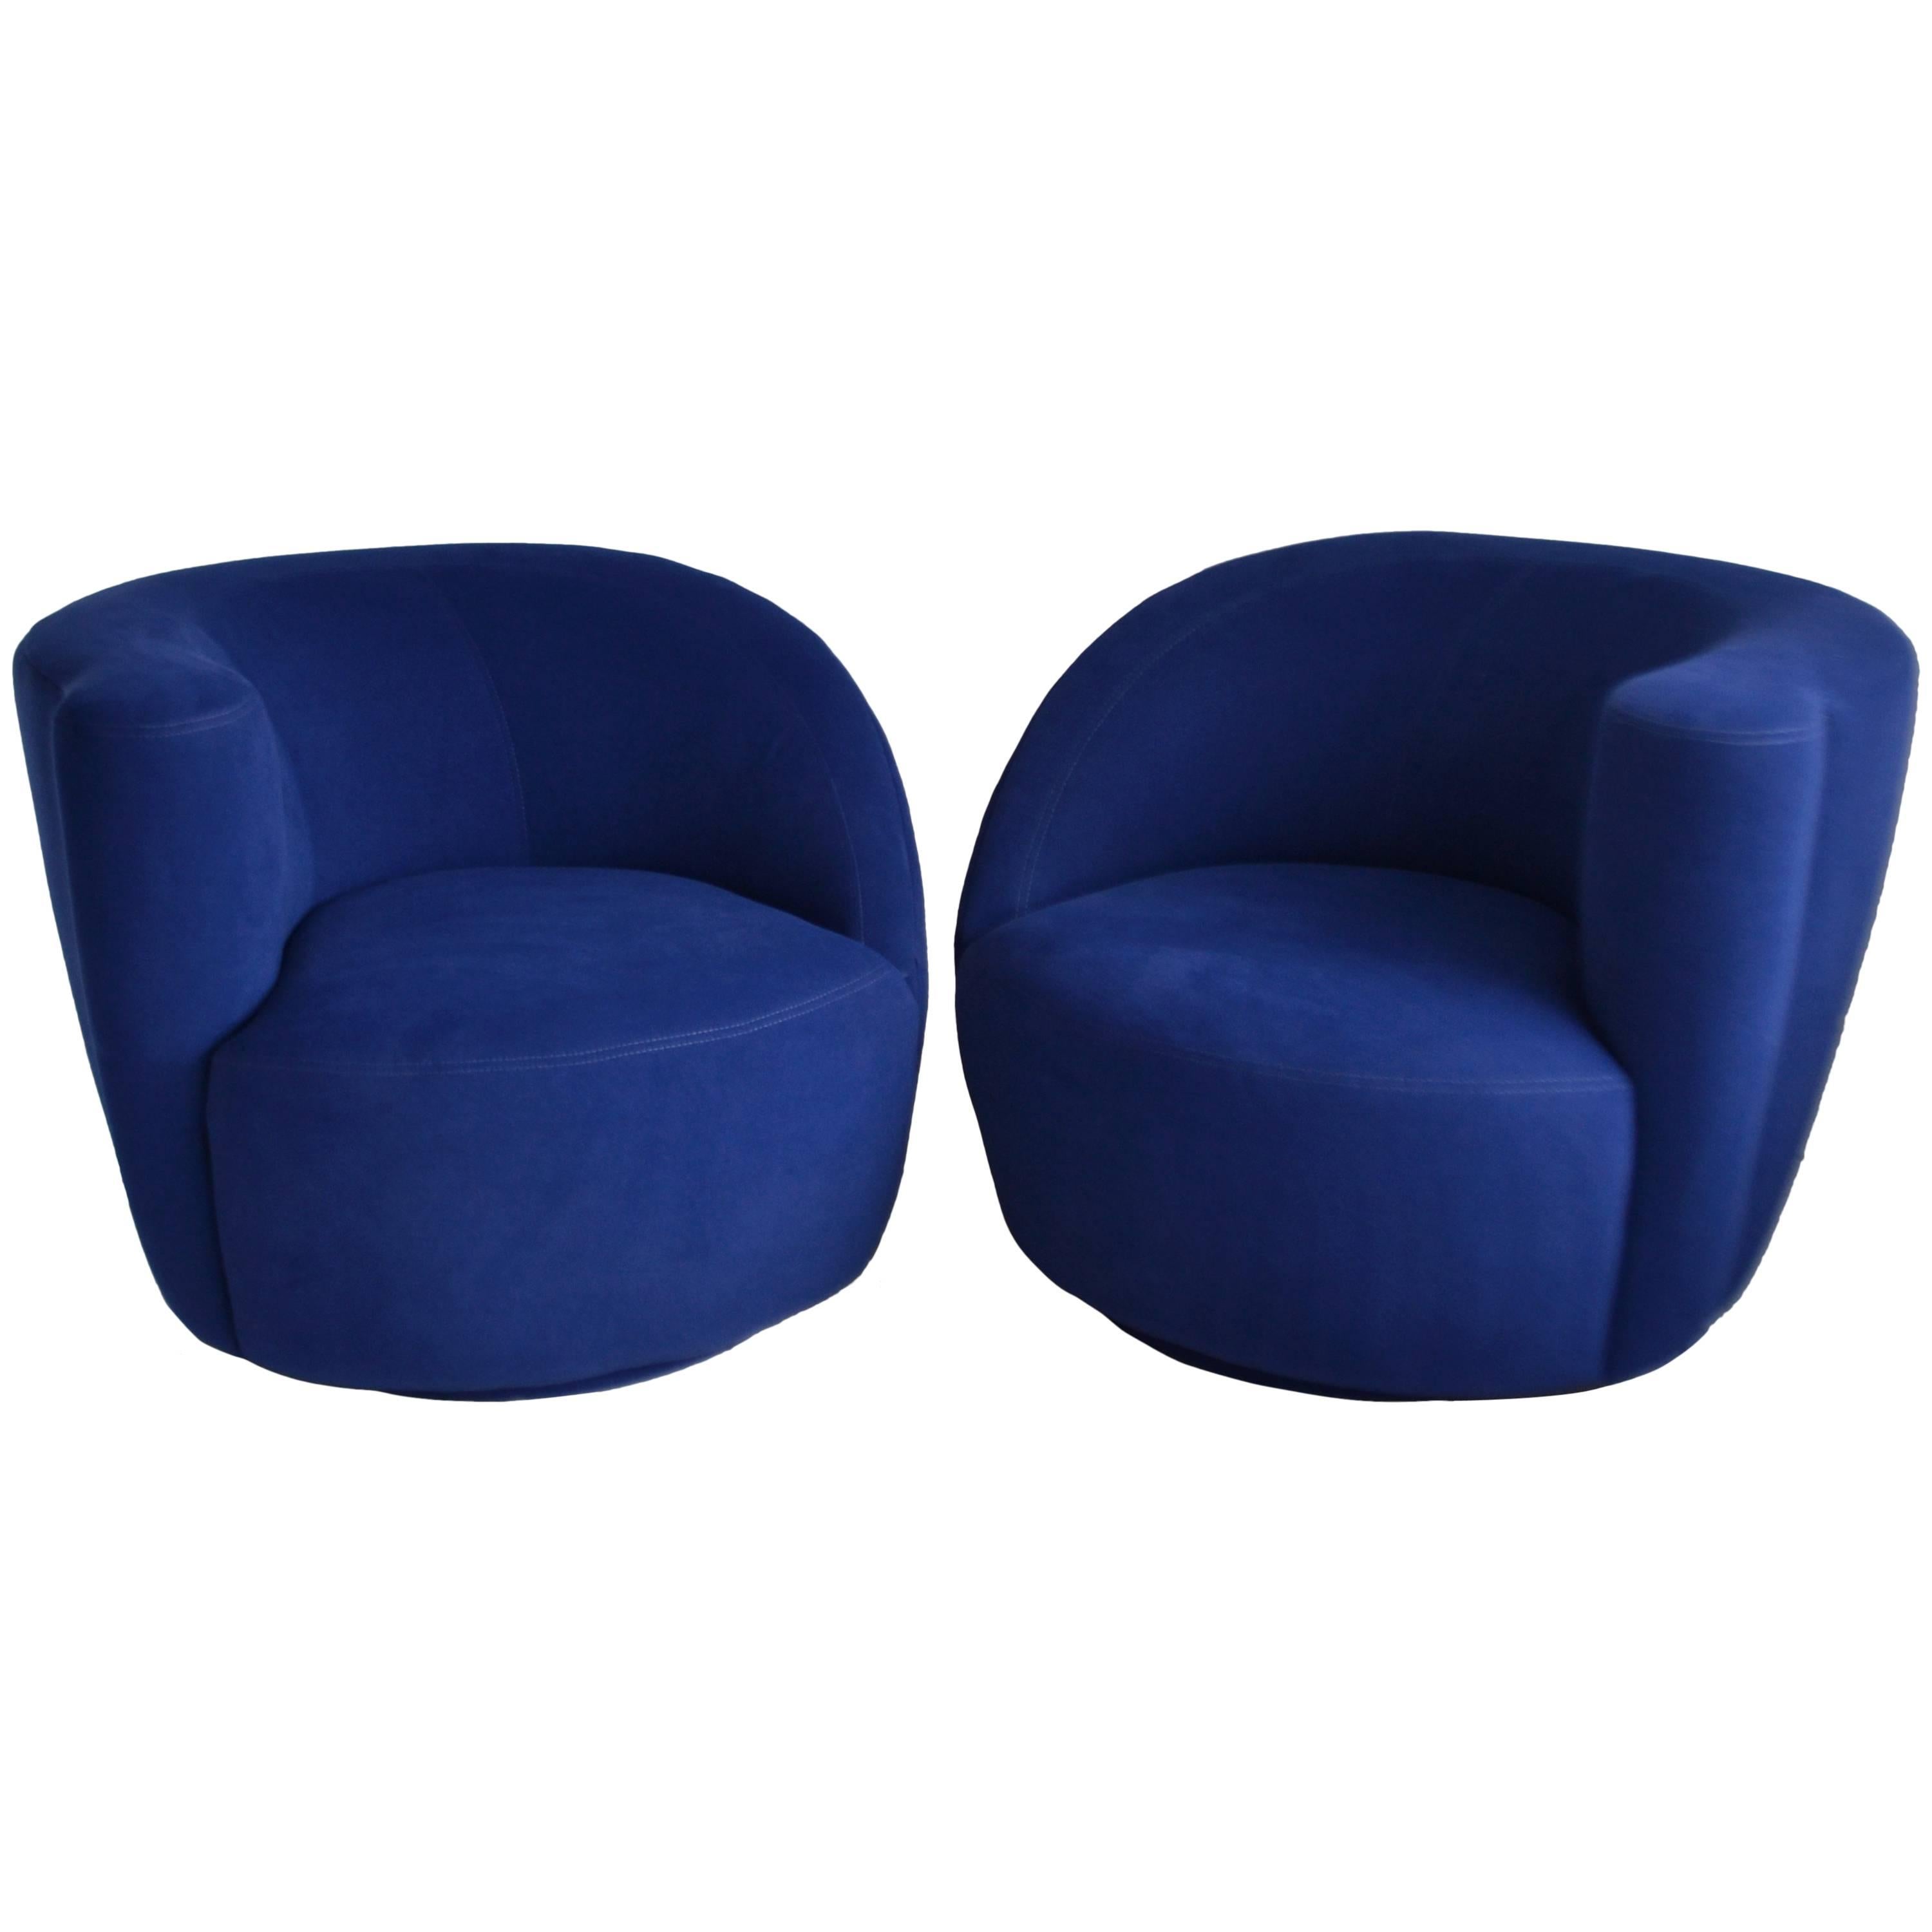 Pair of Nautilus Lounge Chairs by Vladimir Kagan